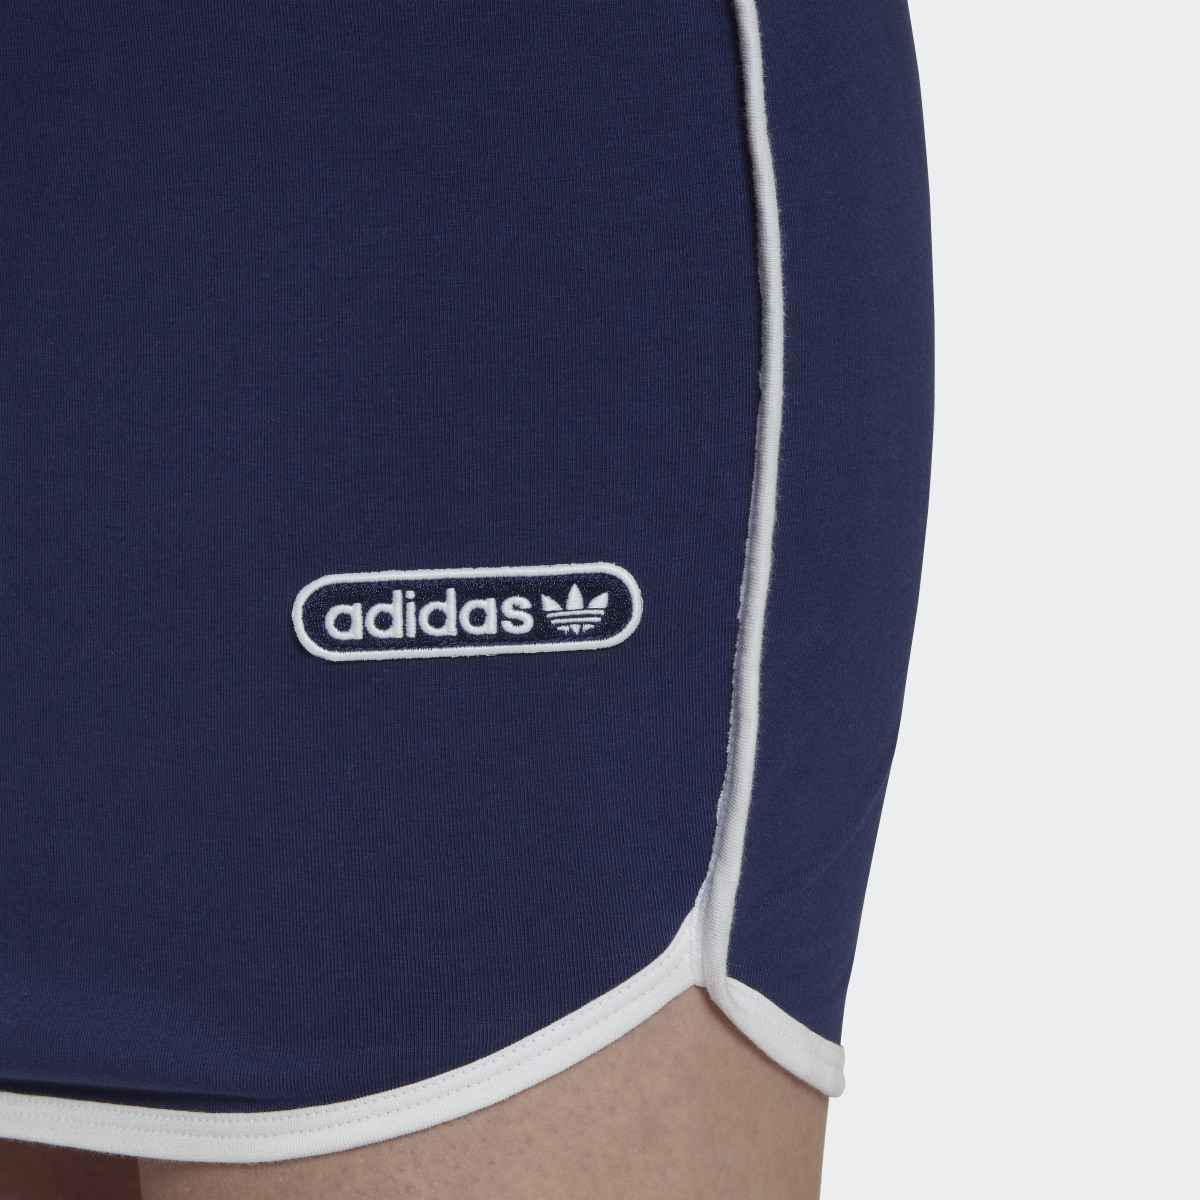 Adidas Mini Skirt with Binding Details. 5